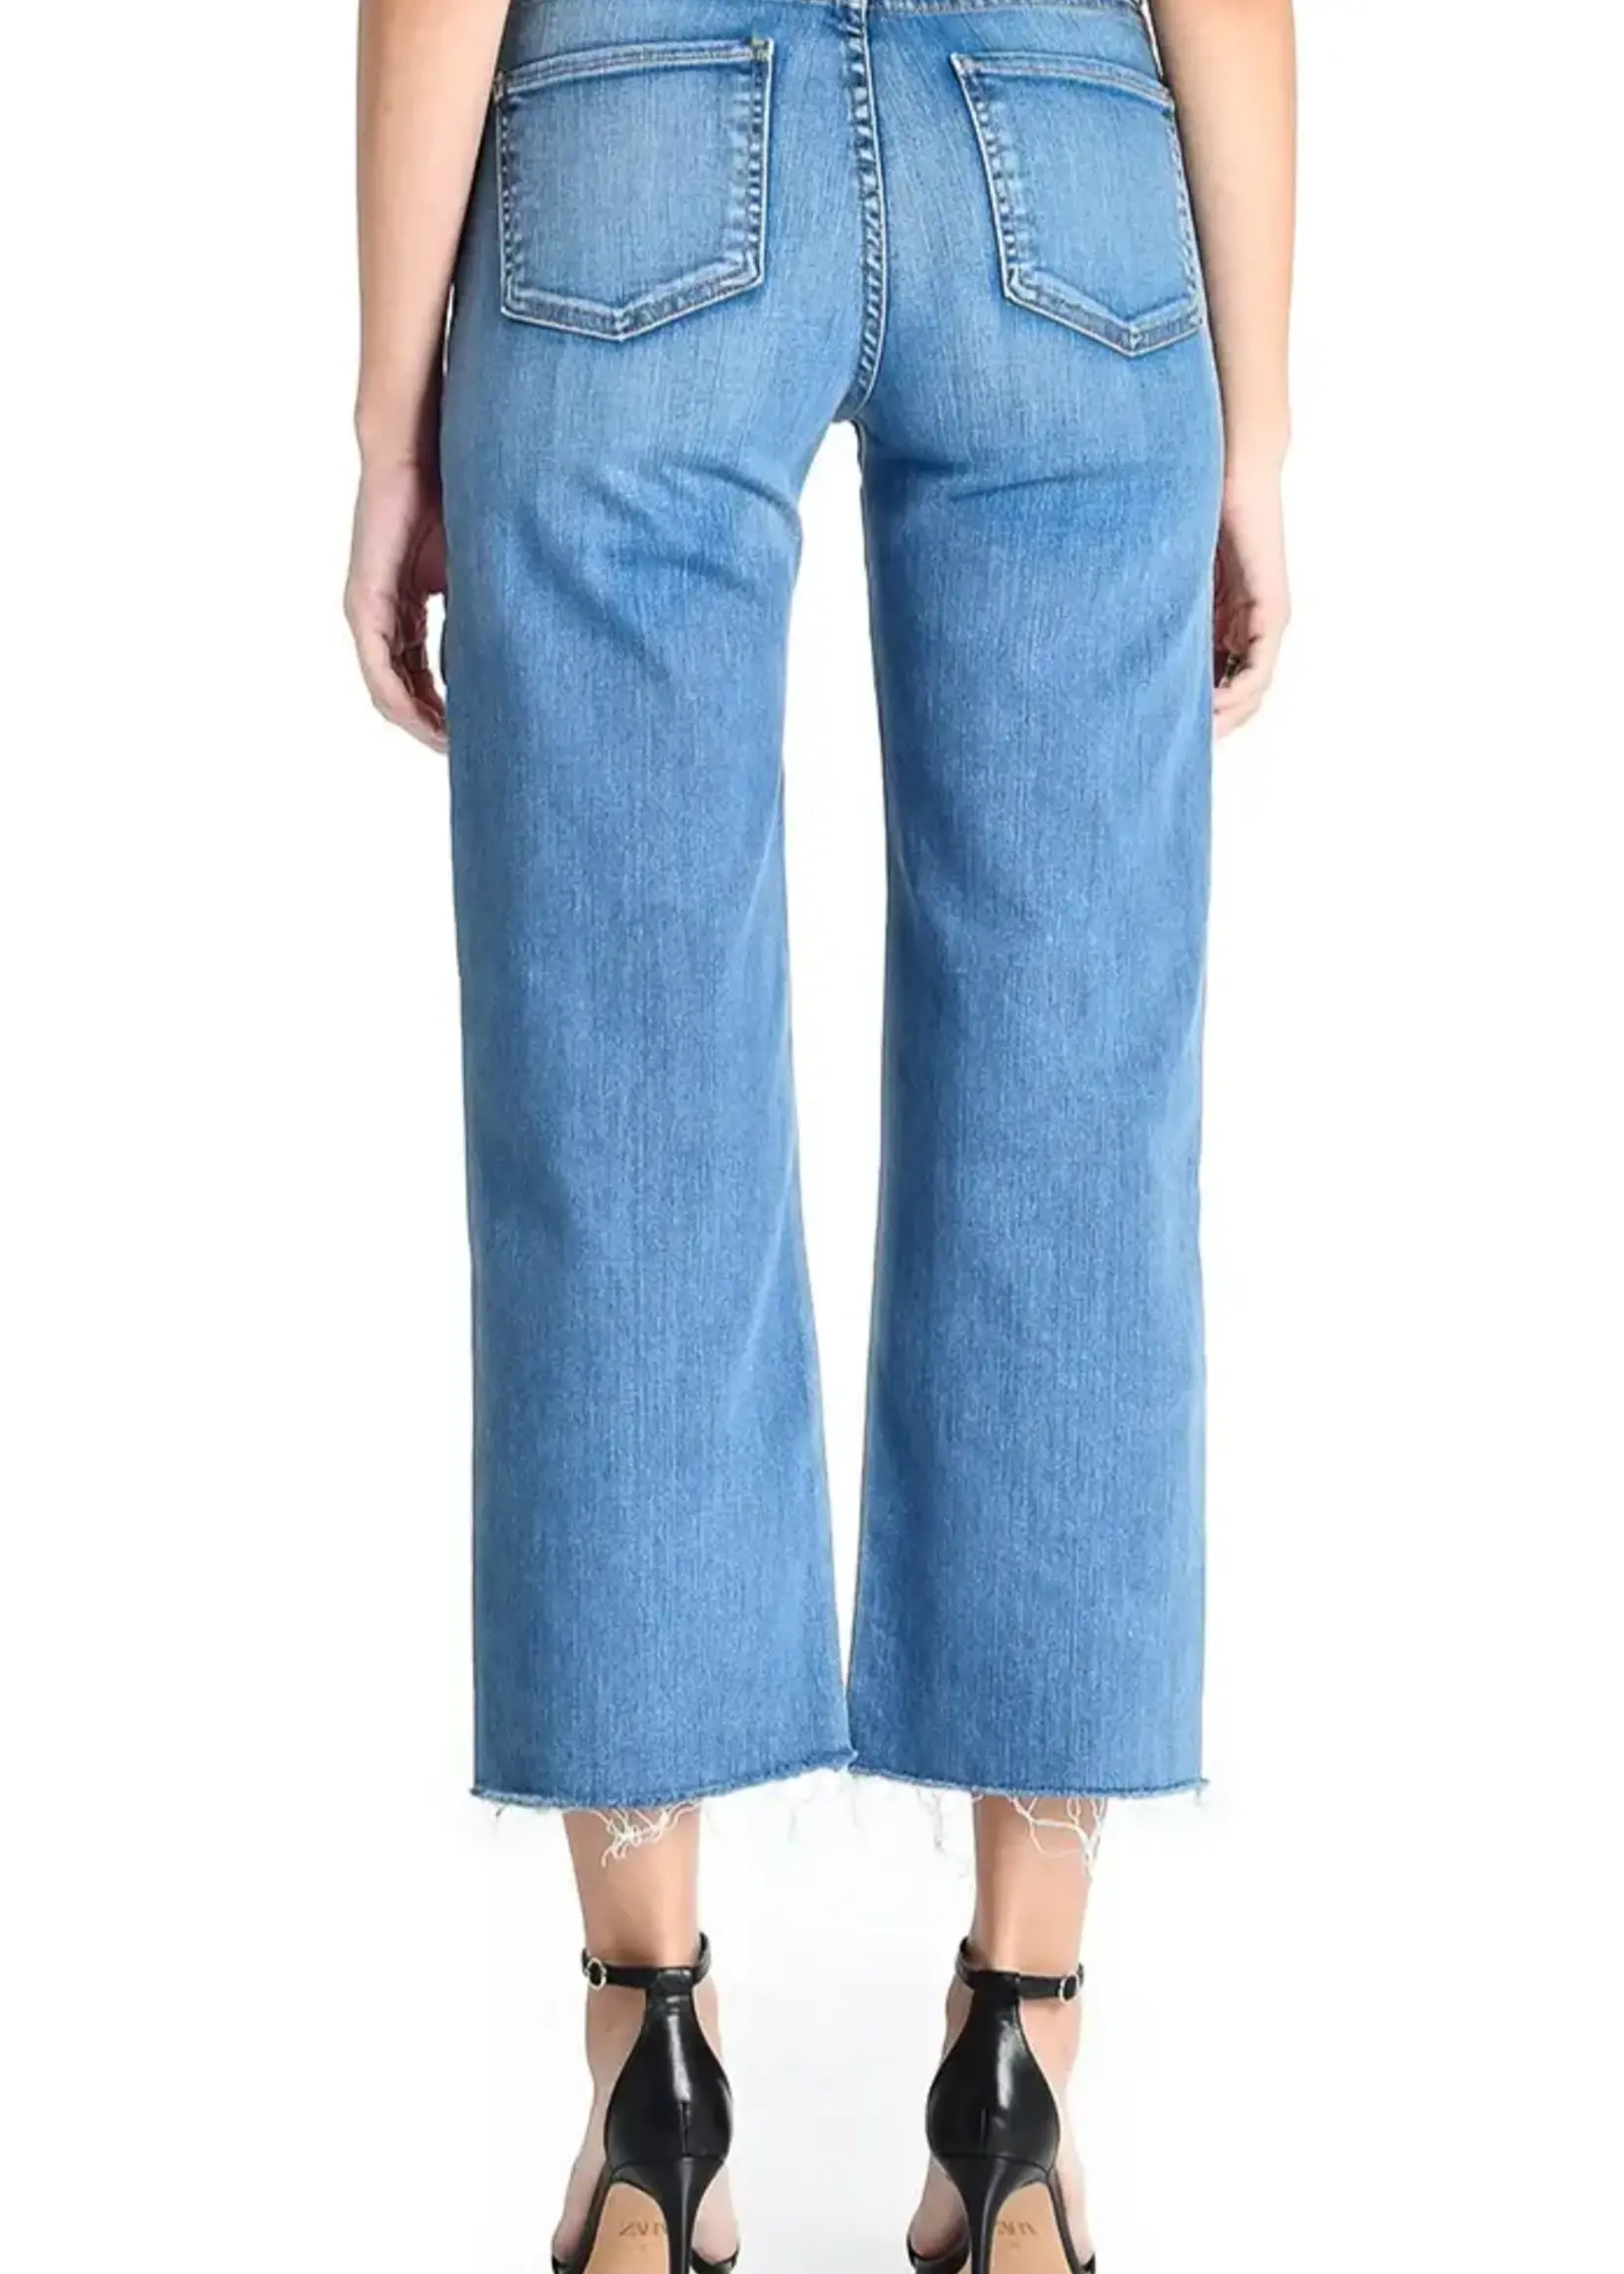 Fidelity 1070 Malibu Mad Jeans